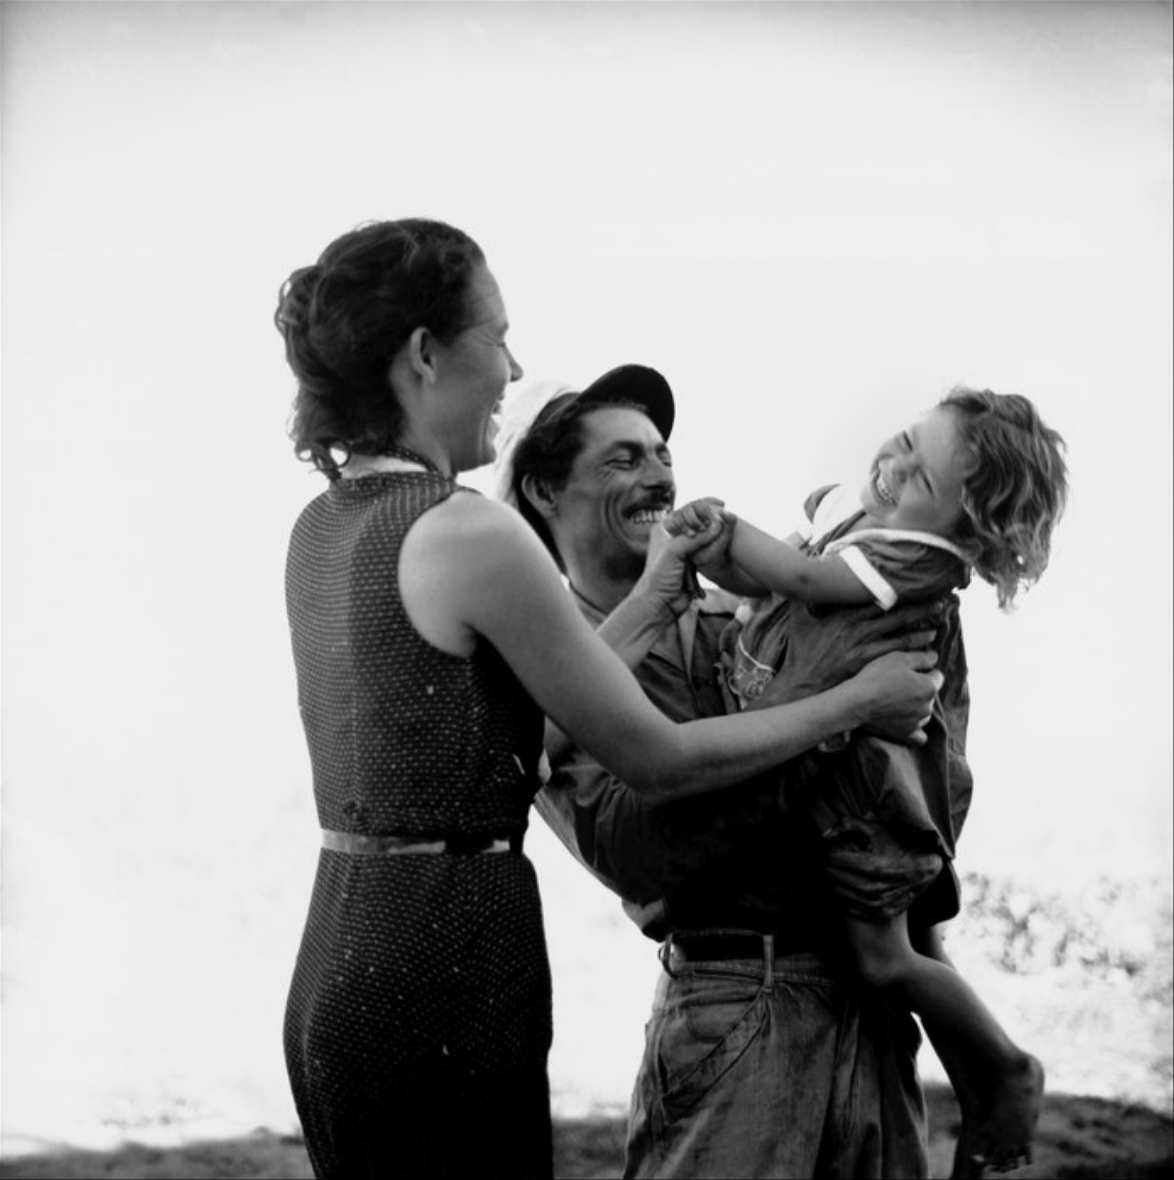 Fisherman and family. Cuba 1954.